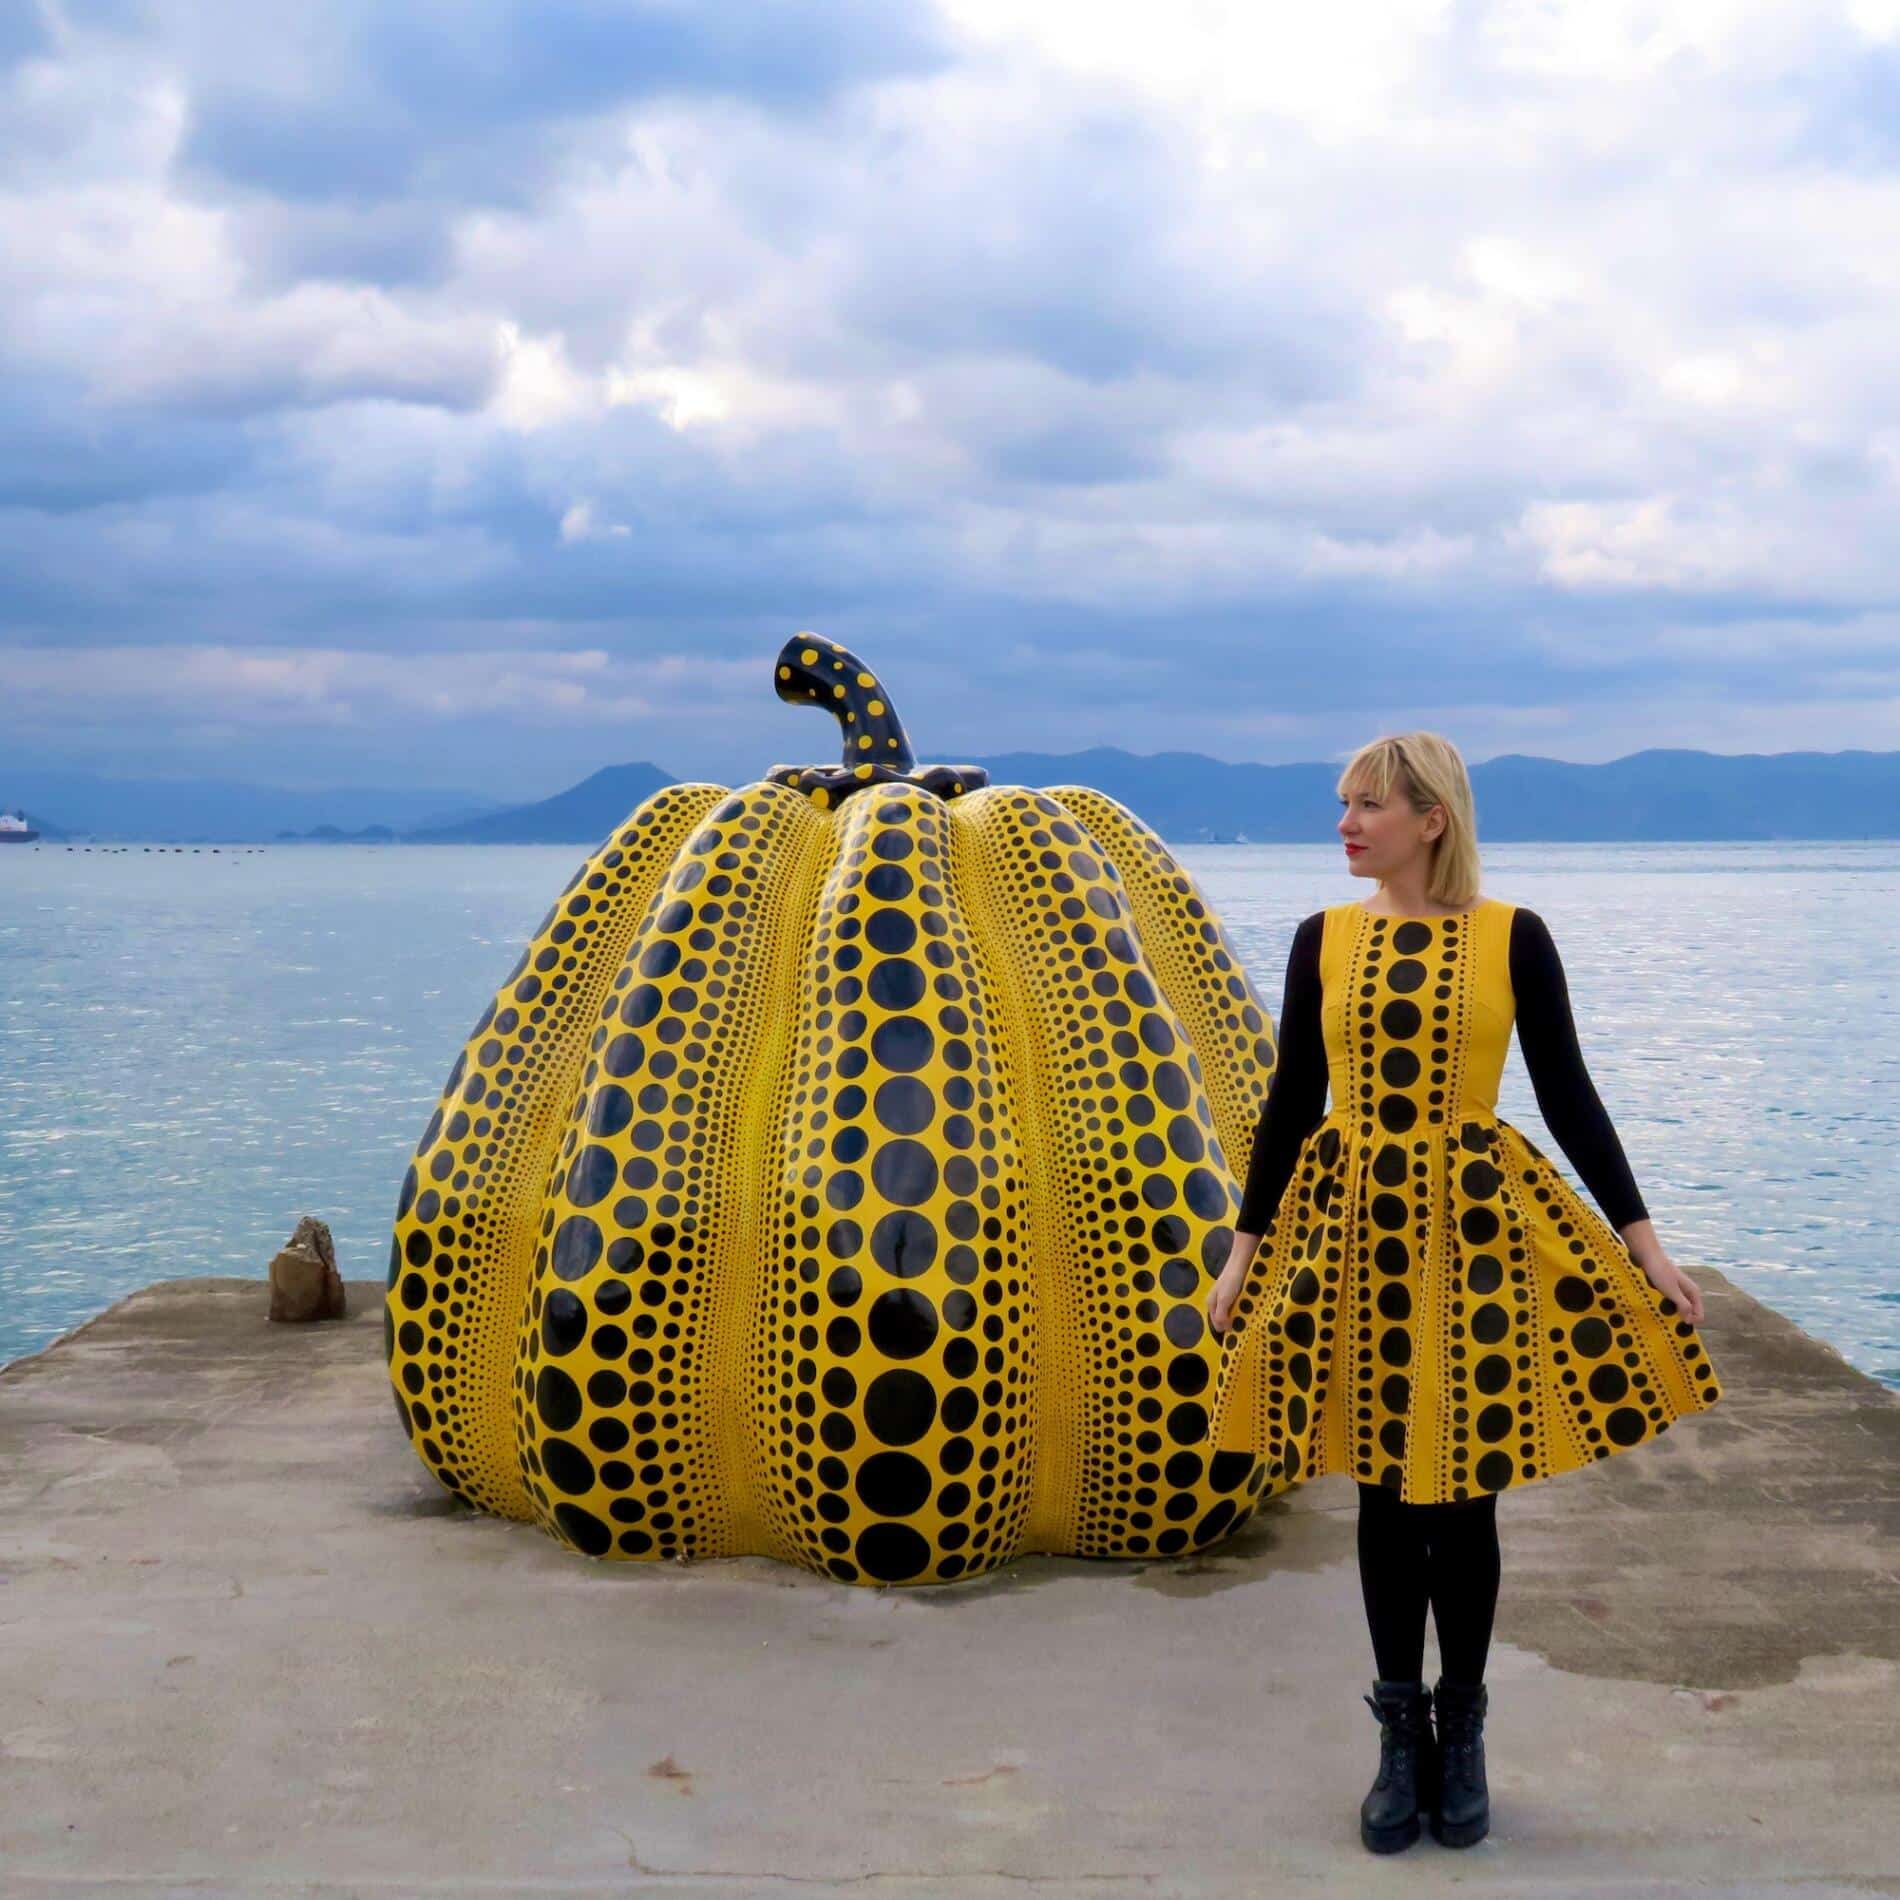 Vestido inspirado en Yayoi Kusama, Yellow Pumpkin (1994) en Benesse Art Site. Imagen de Meri Feir